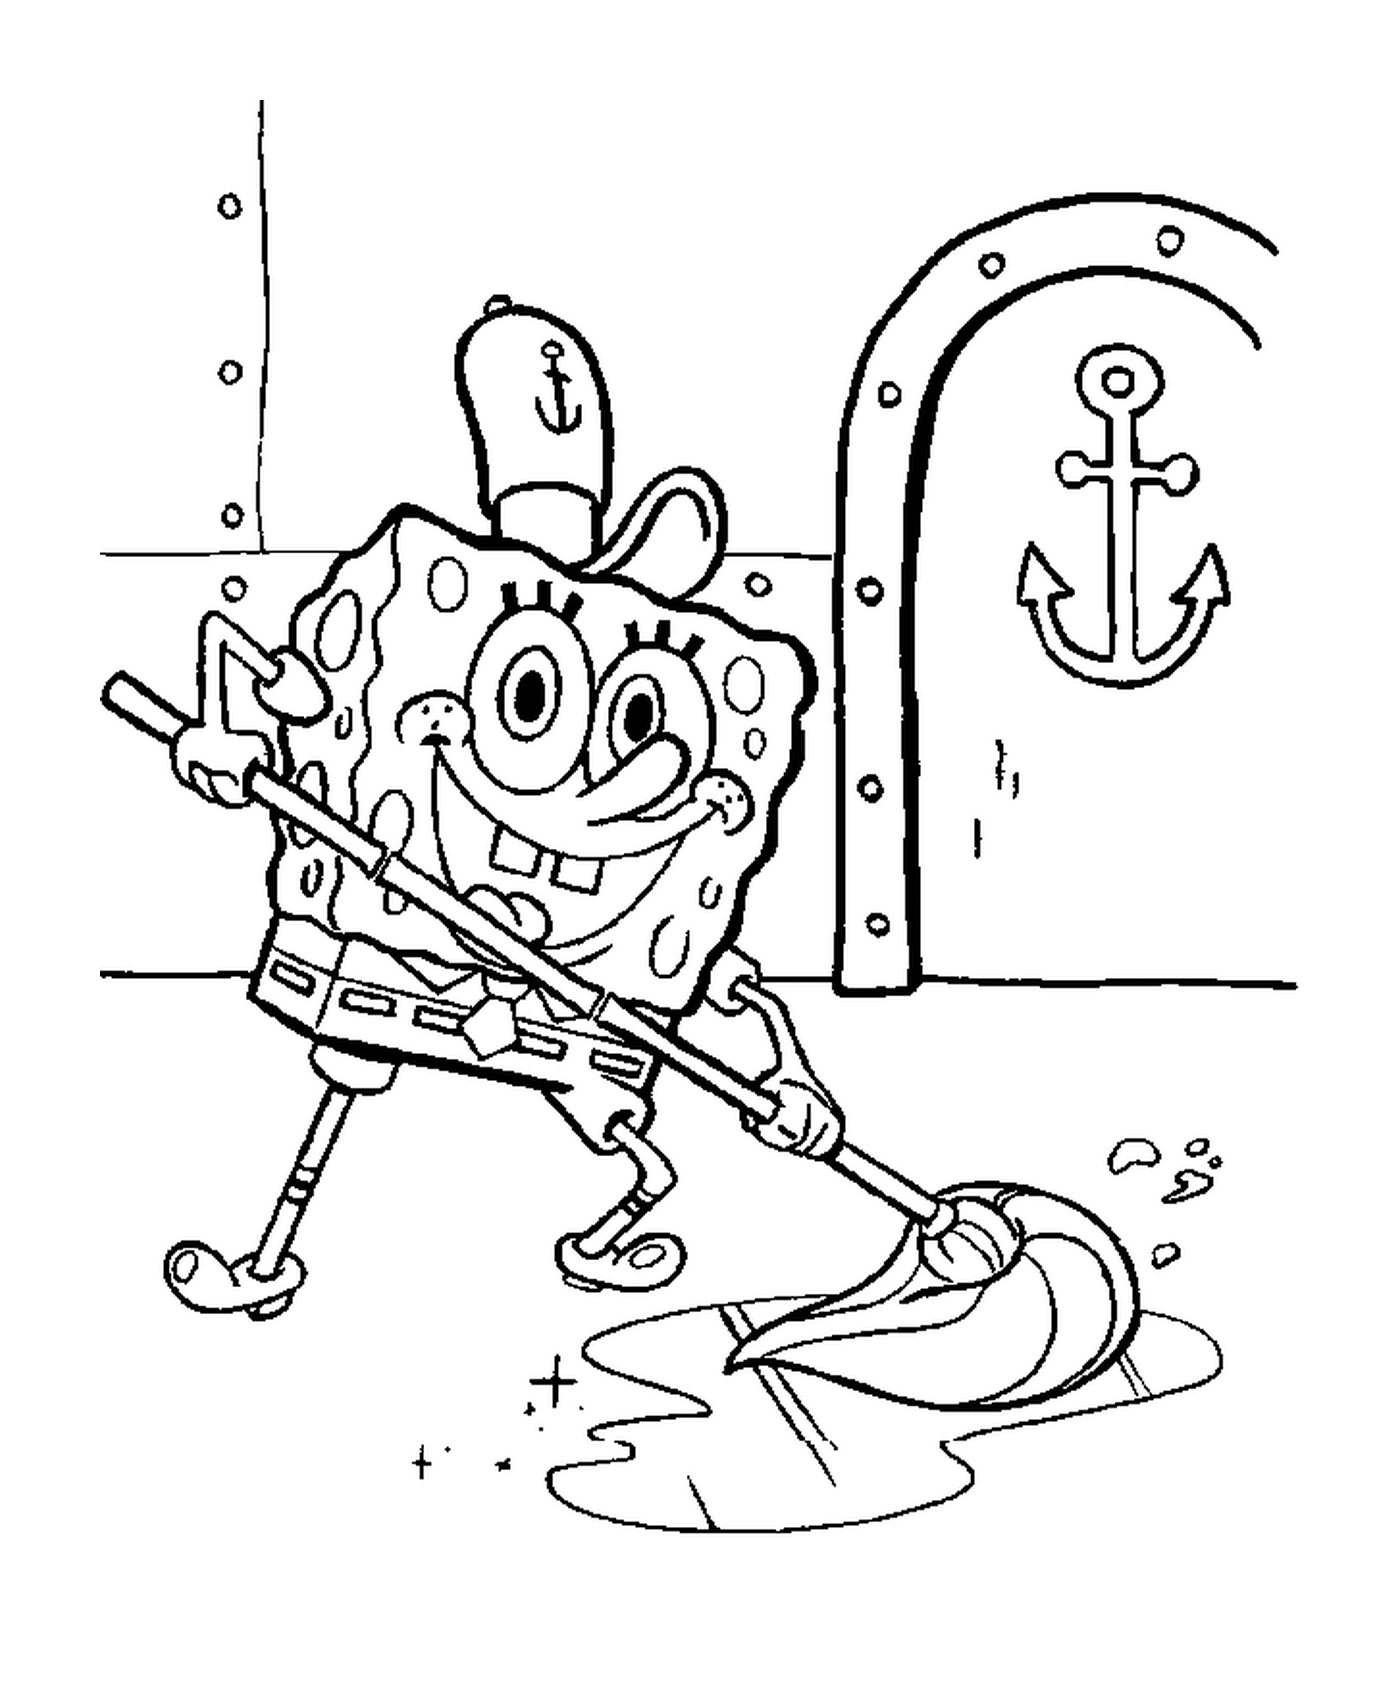  Bob's cleaning the sponge 